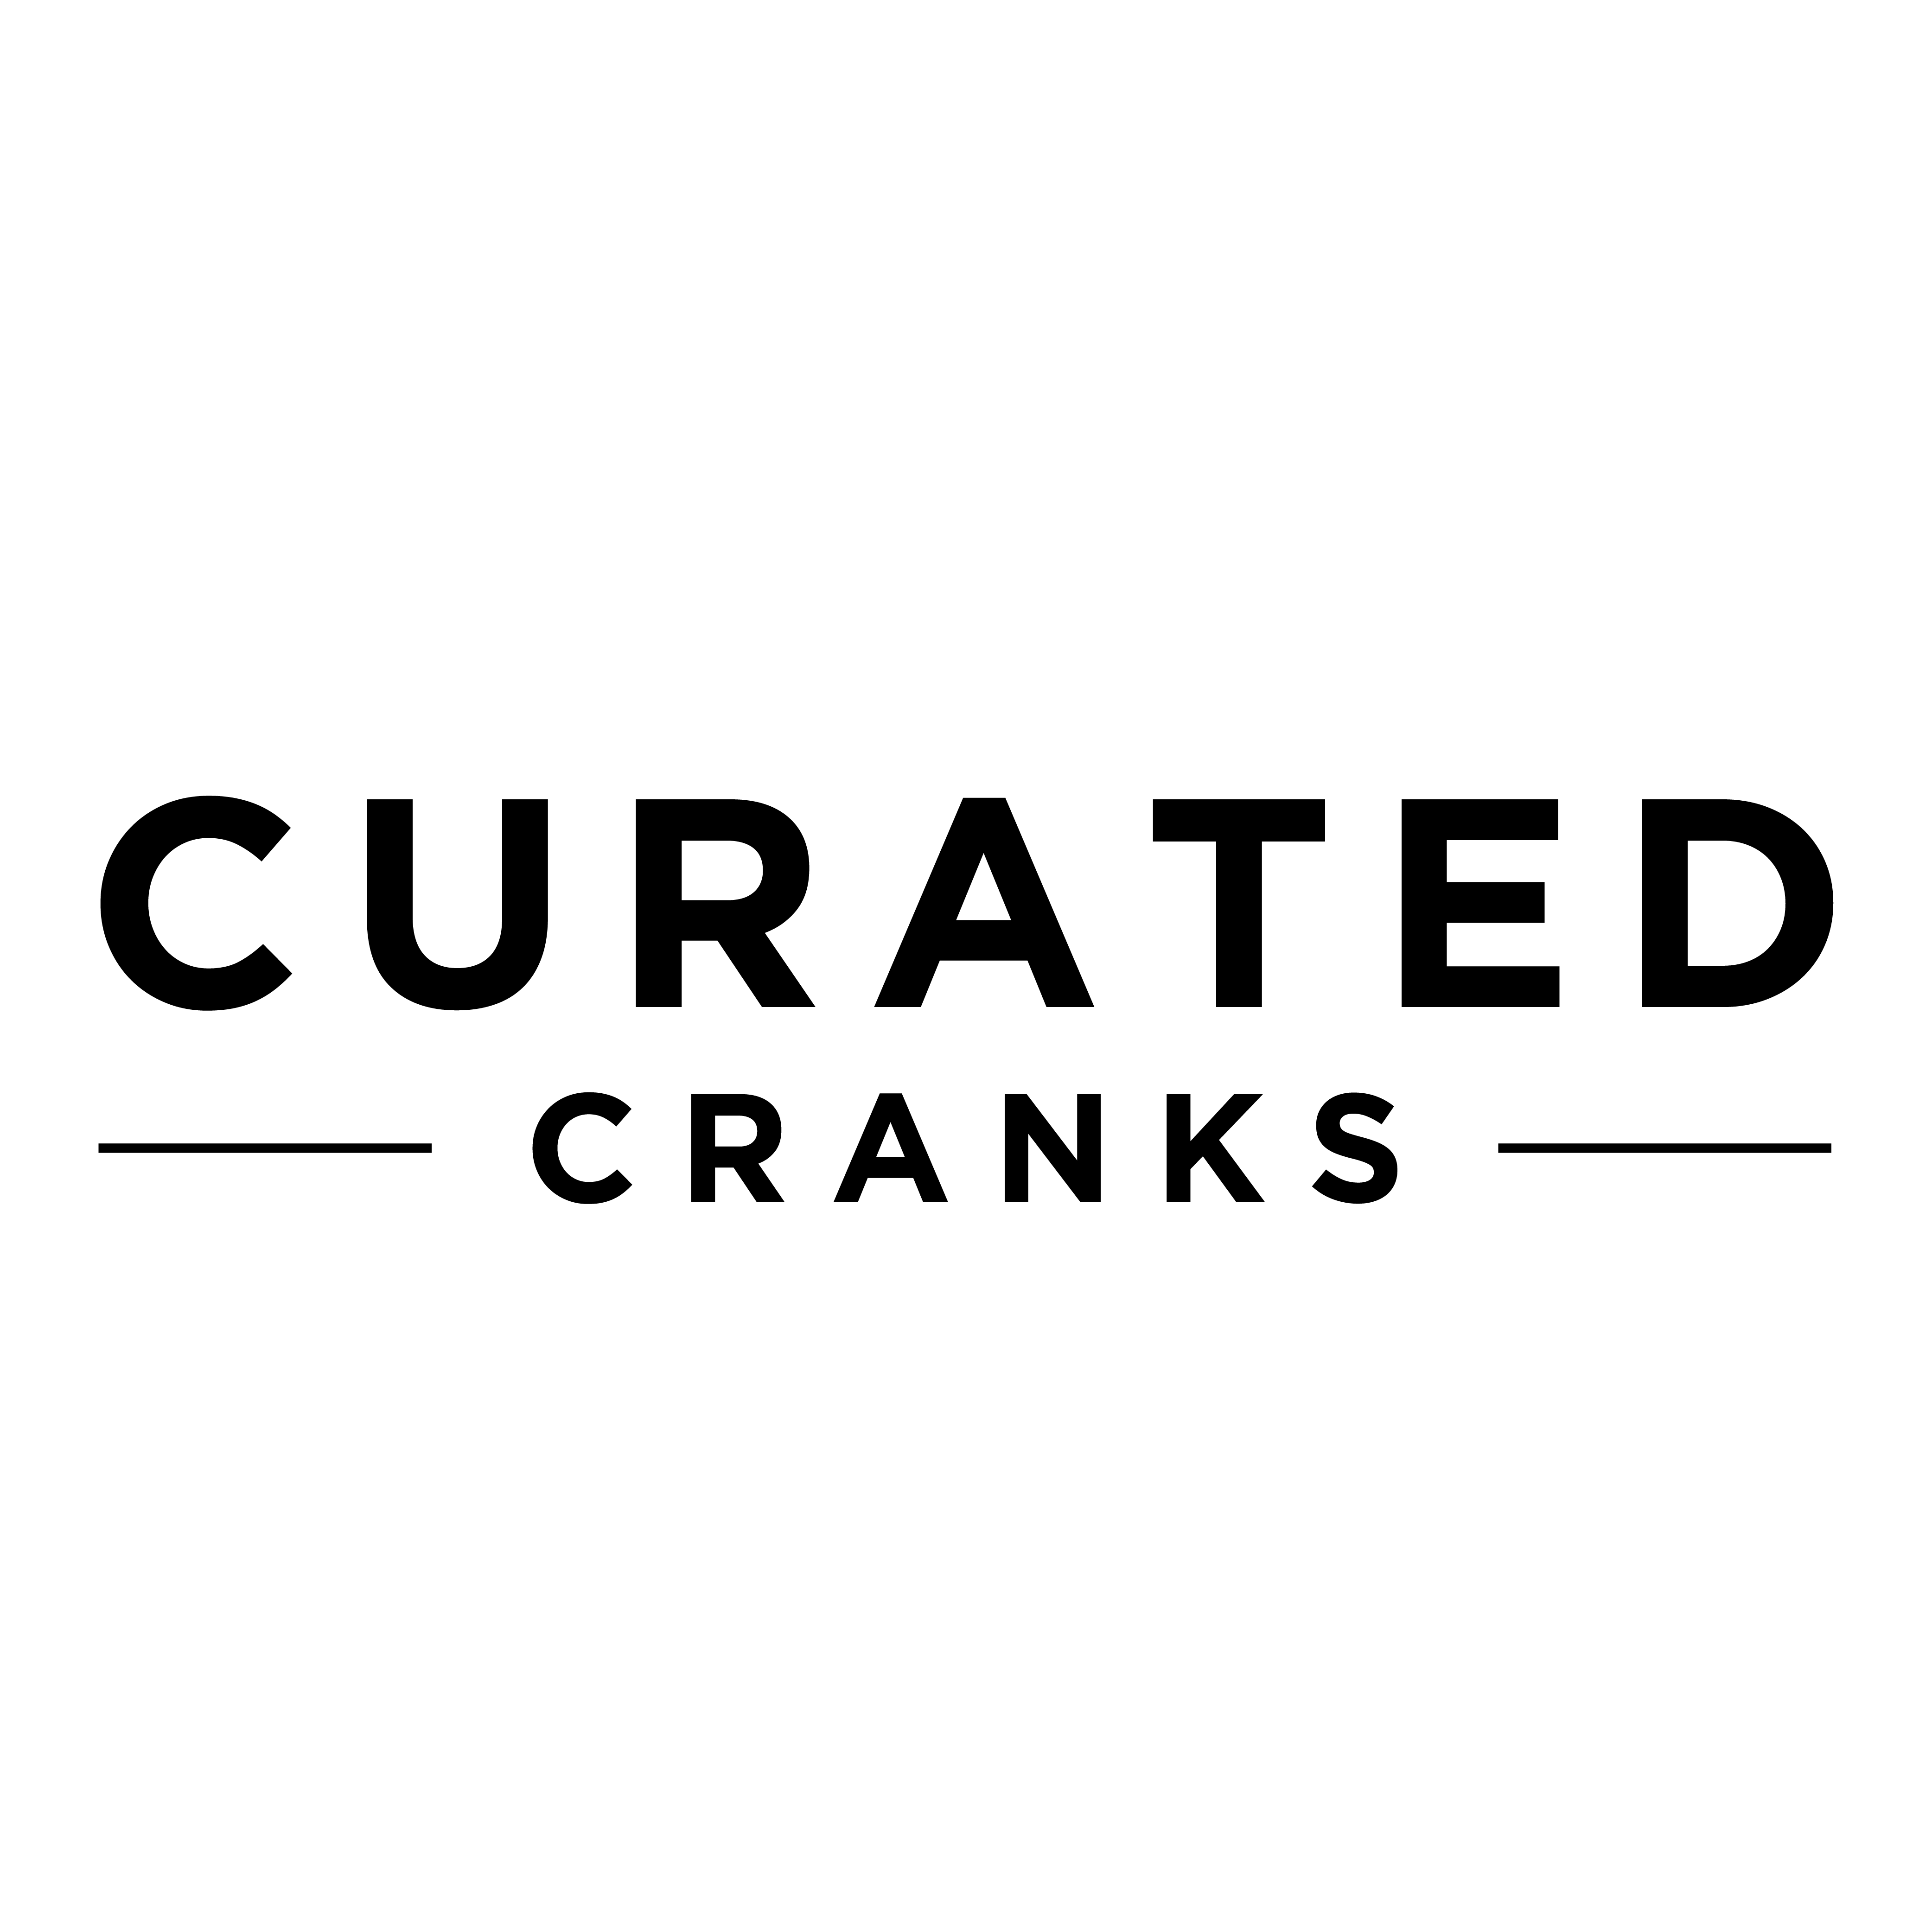 Curated Cranks logo